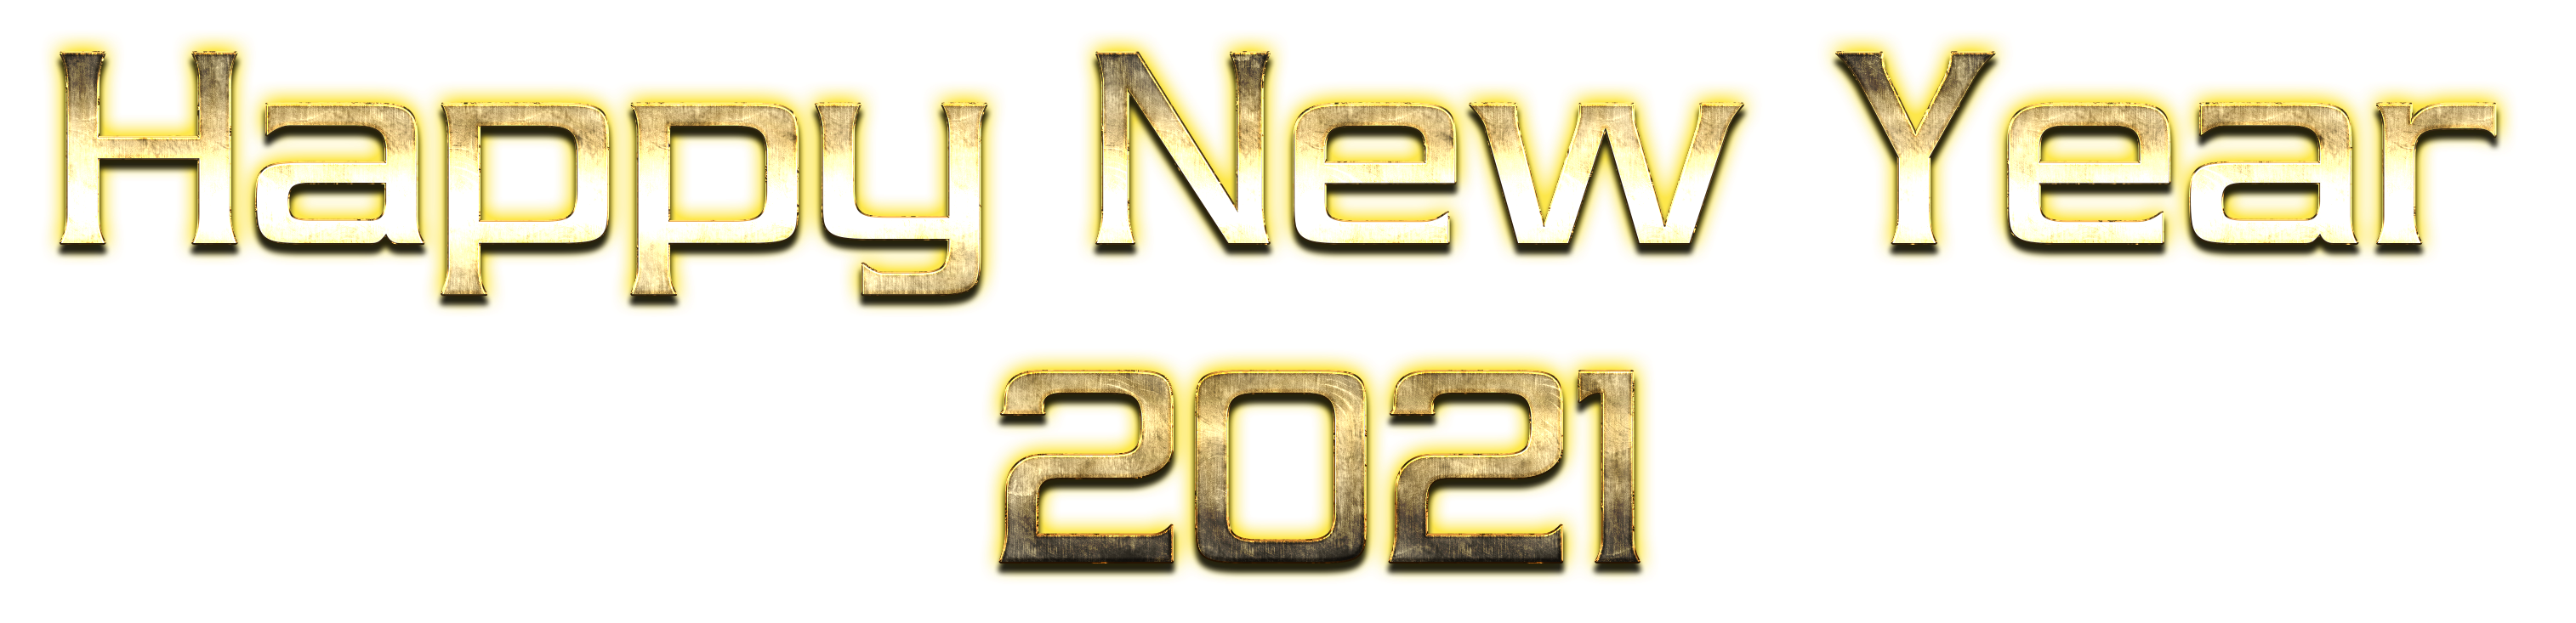 2021 rok